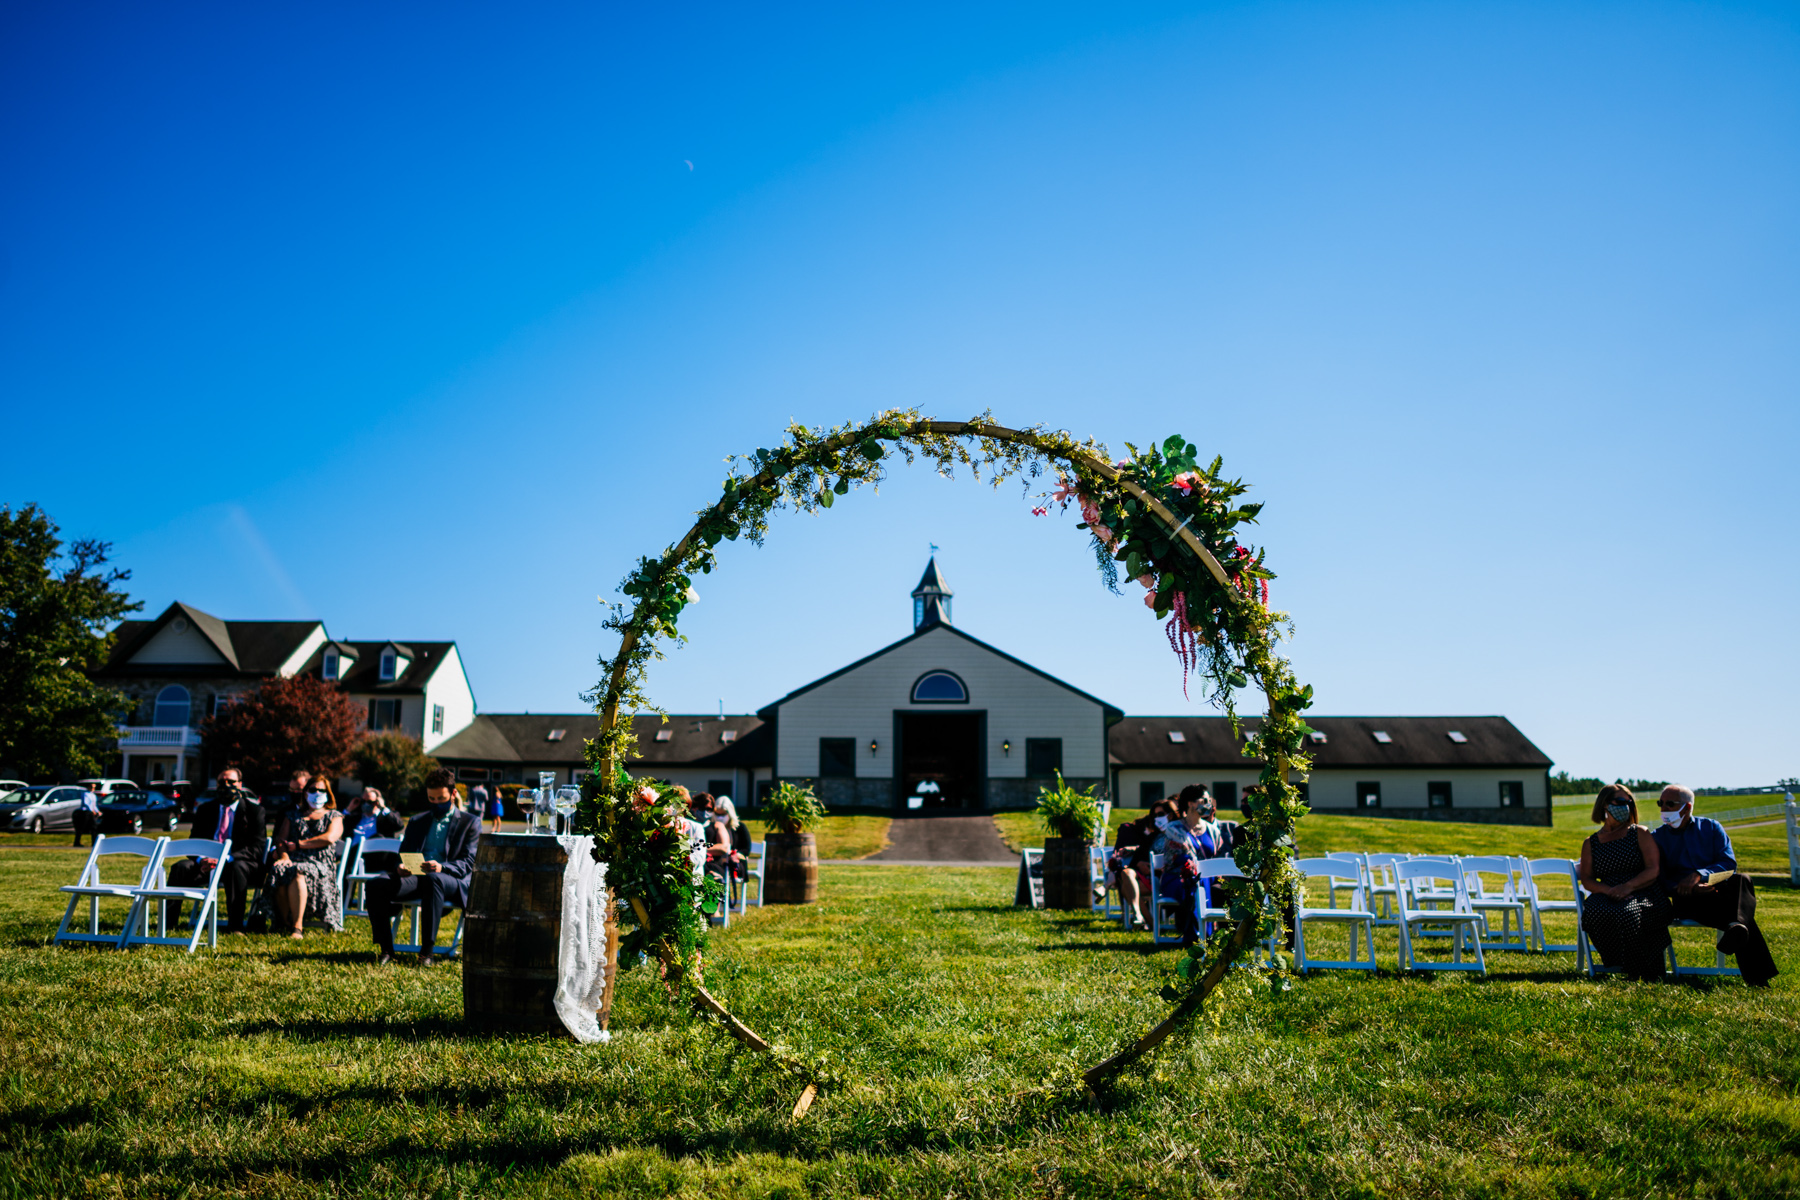 vignon manor farm wedding flower ring arch